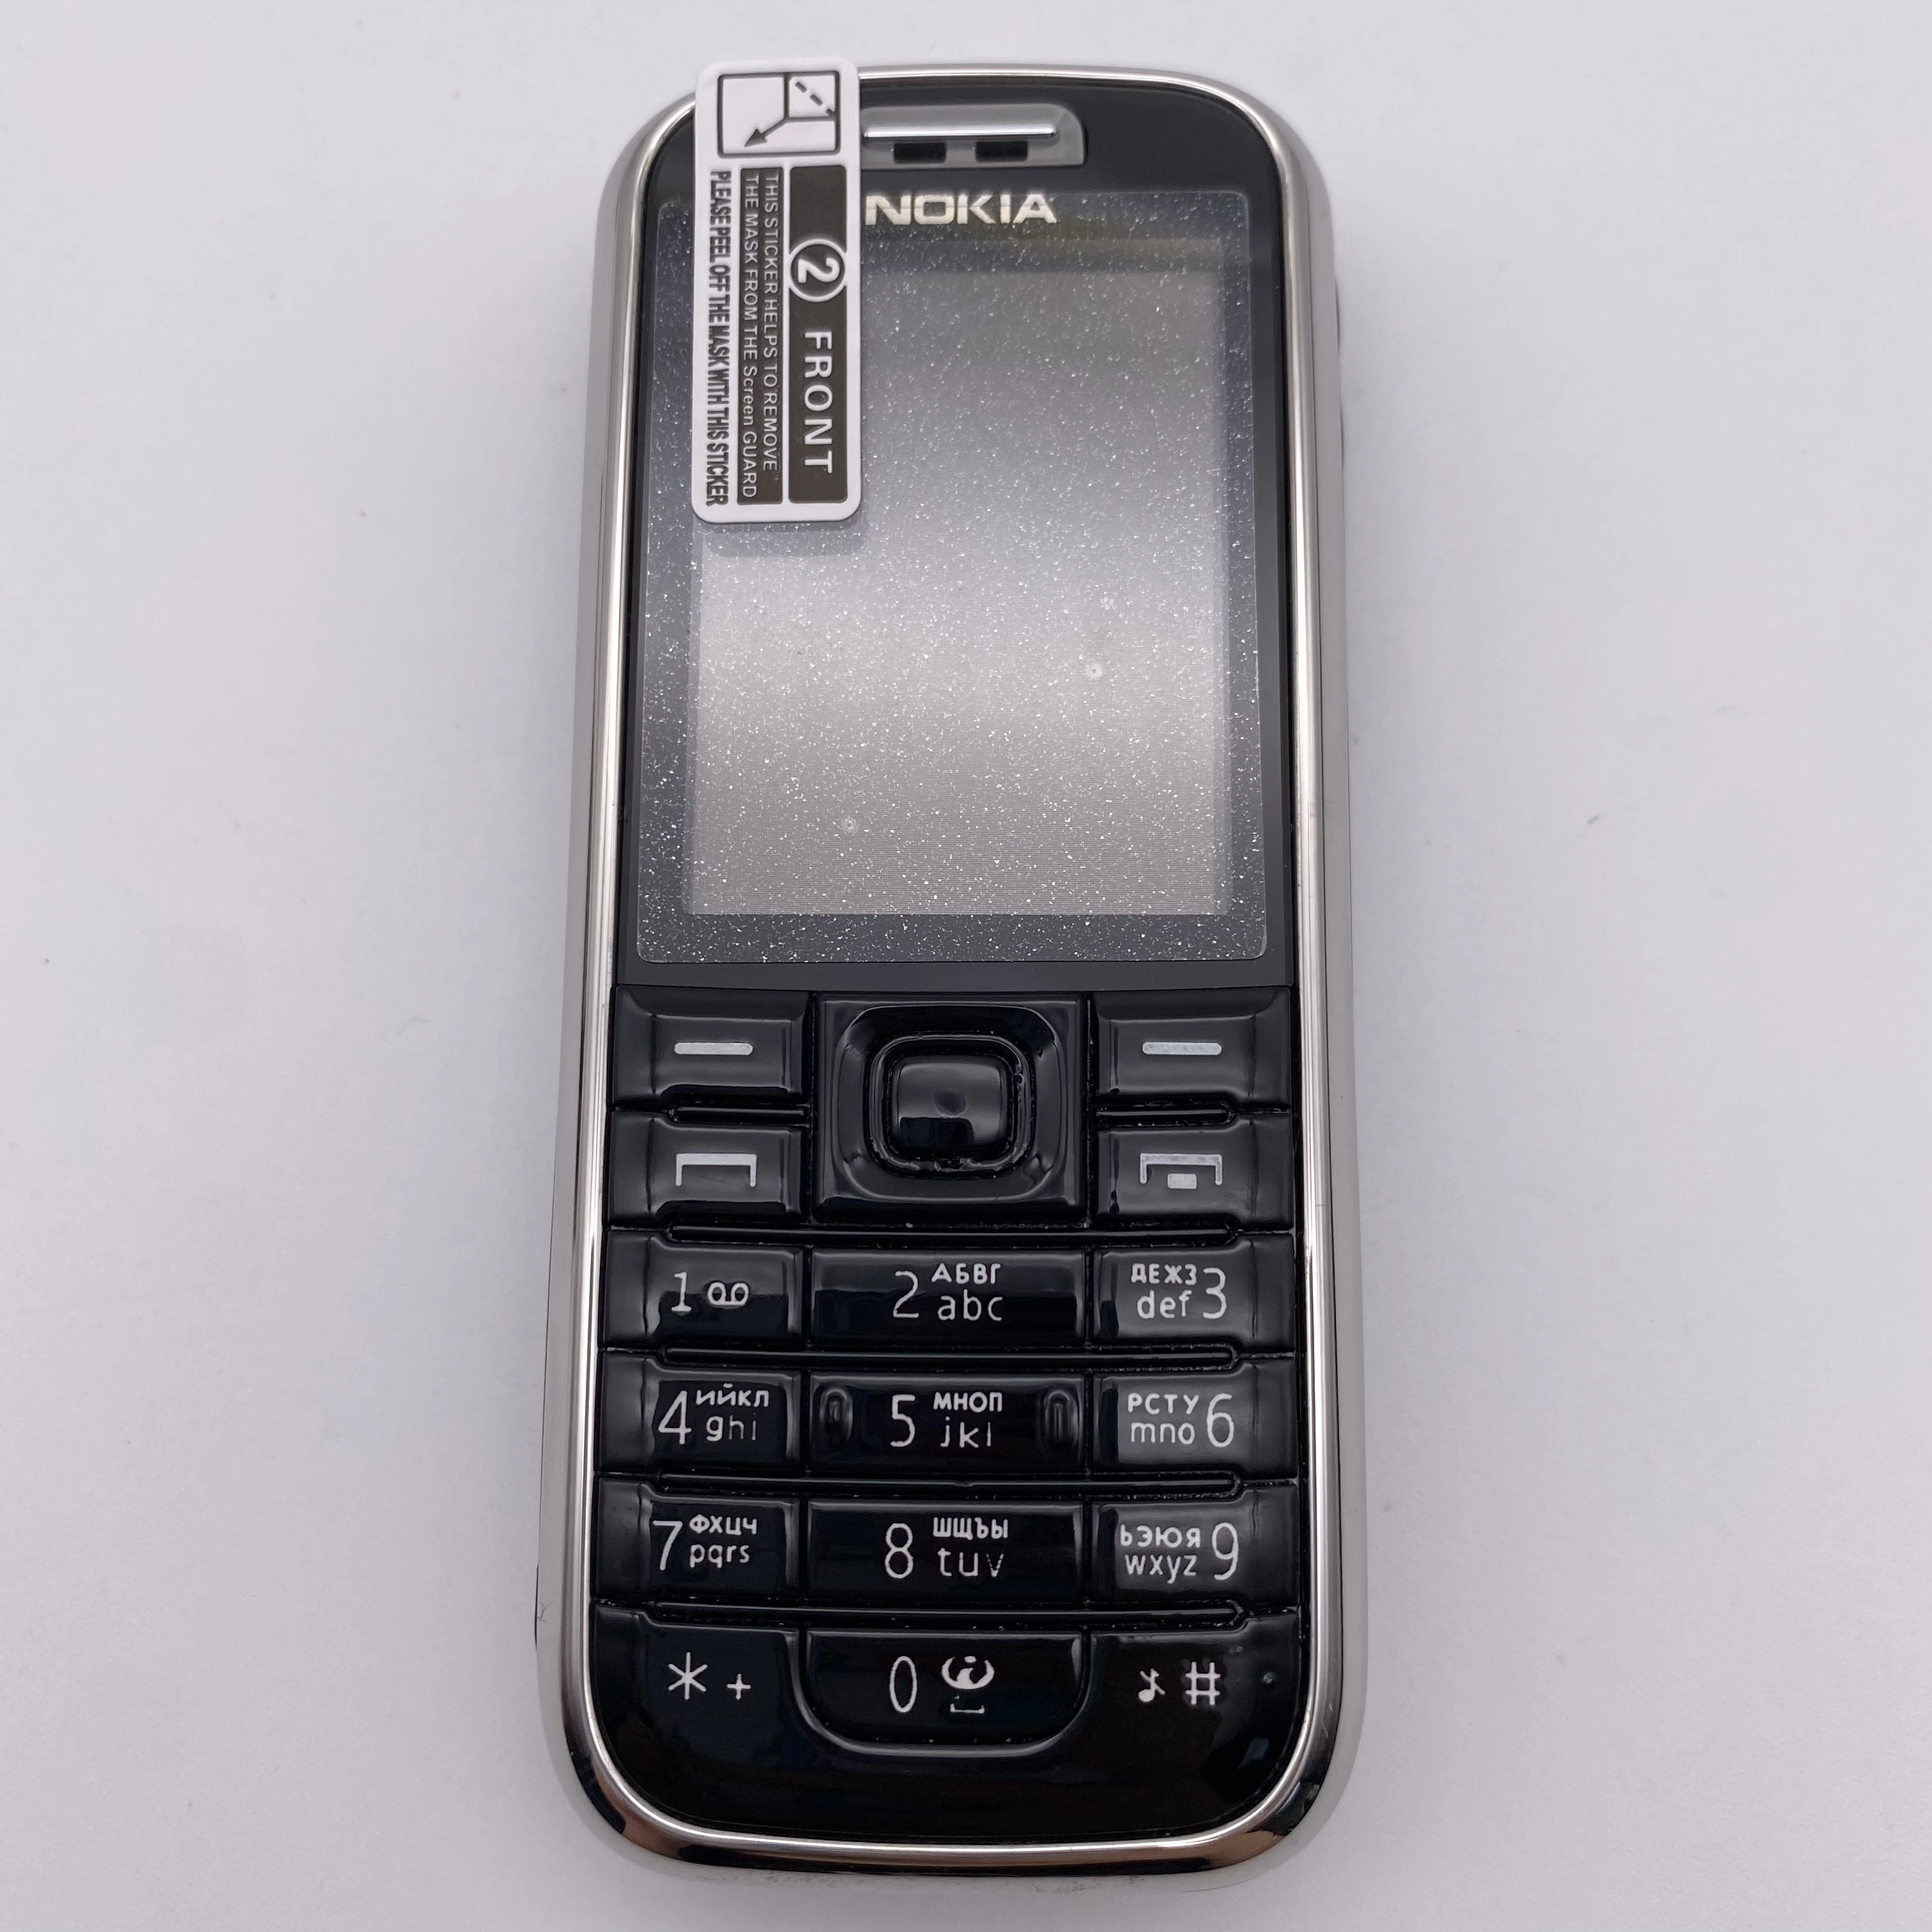 nokia 6233 refurbished original phone 2 mp 3g mini sim camera mp3 origianl unlocked free shipping free global shipping